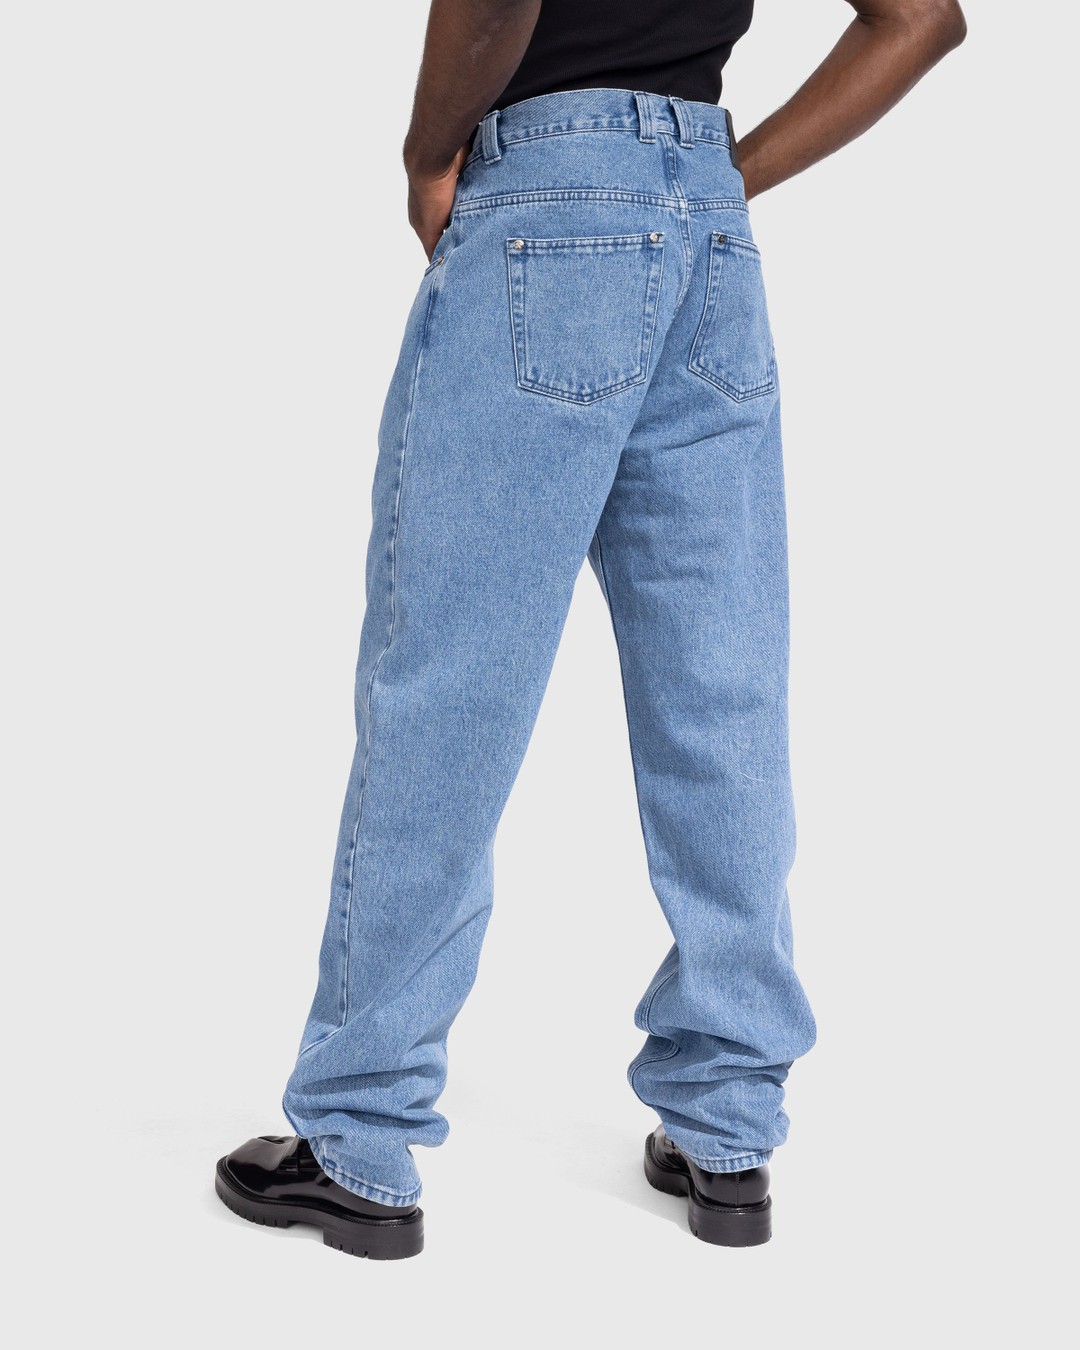 GmbH – Cyrus Denim Trousers Indigo Blue - Pants - Blue - Image 3